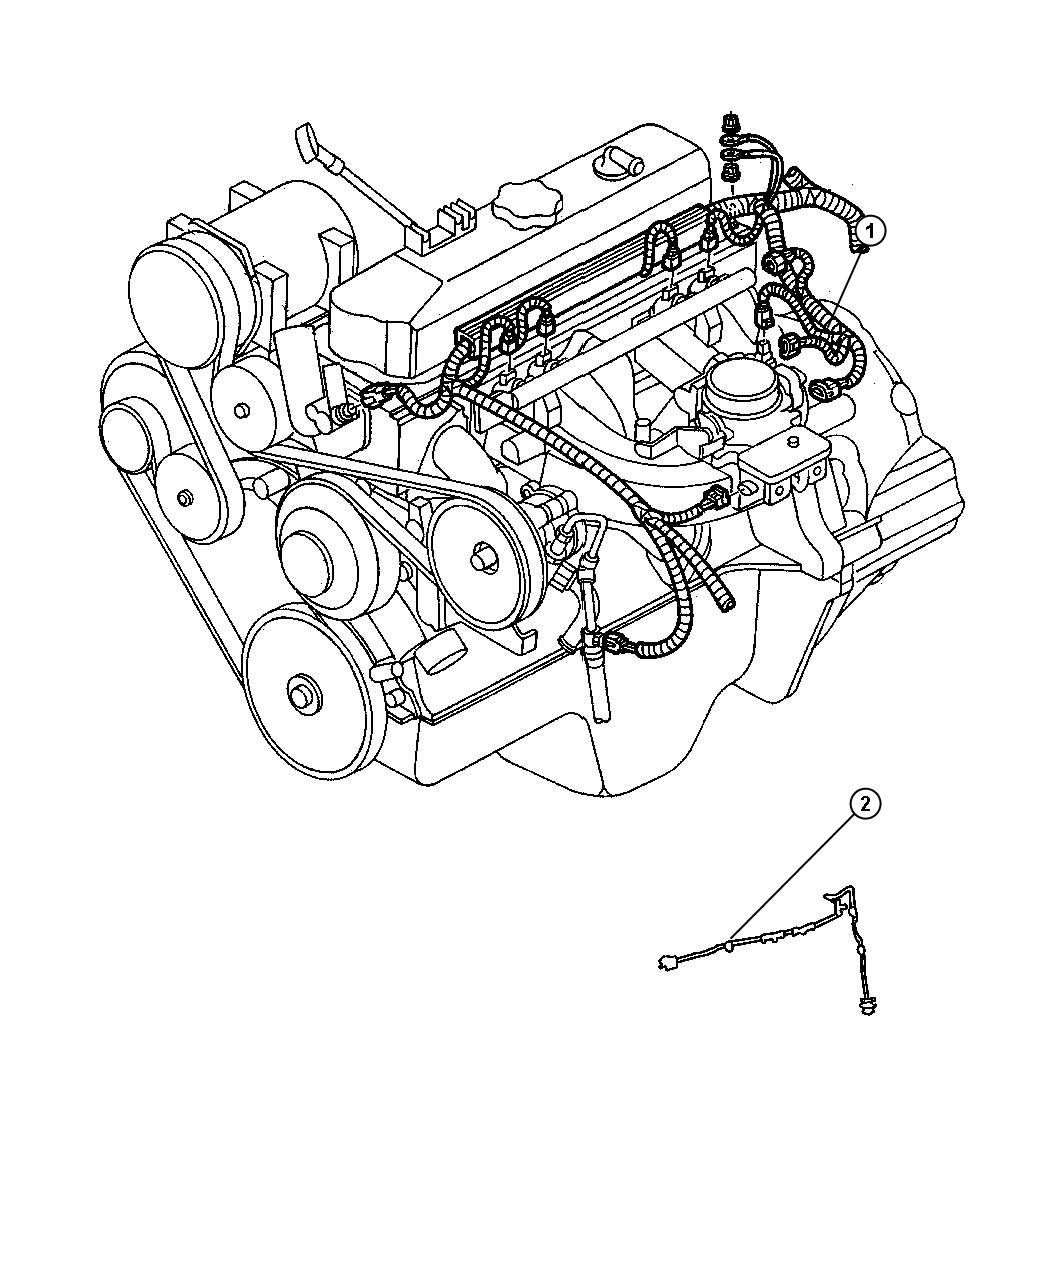 Dodge Durango Wiring  Engine  Federal And Export  U S  50